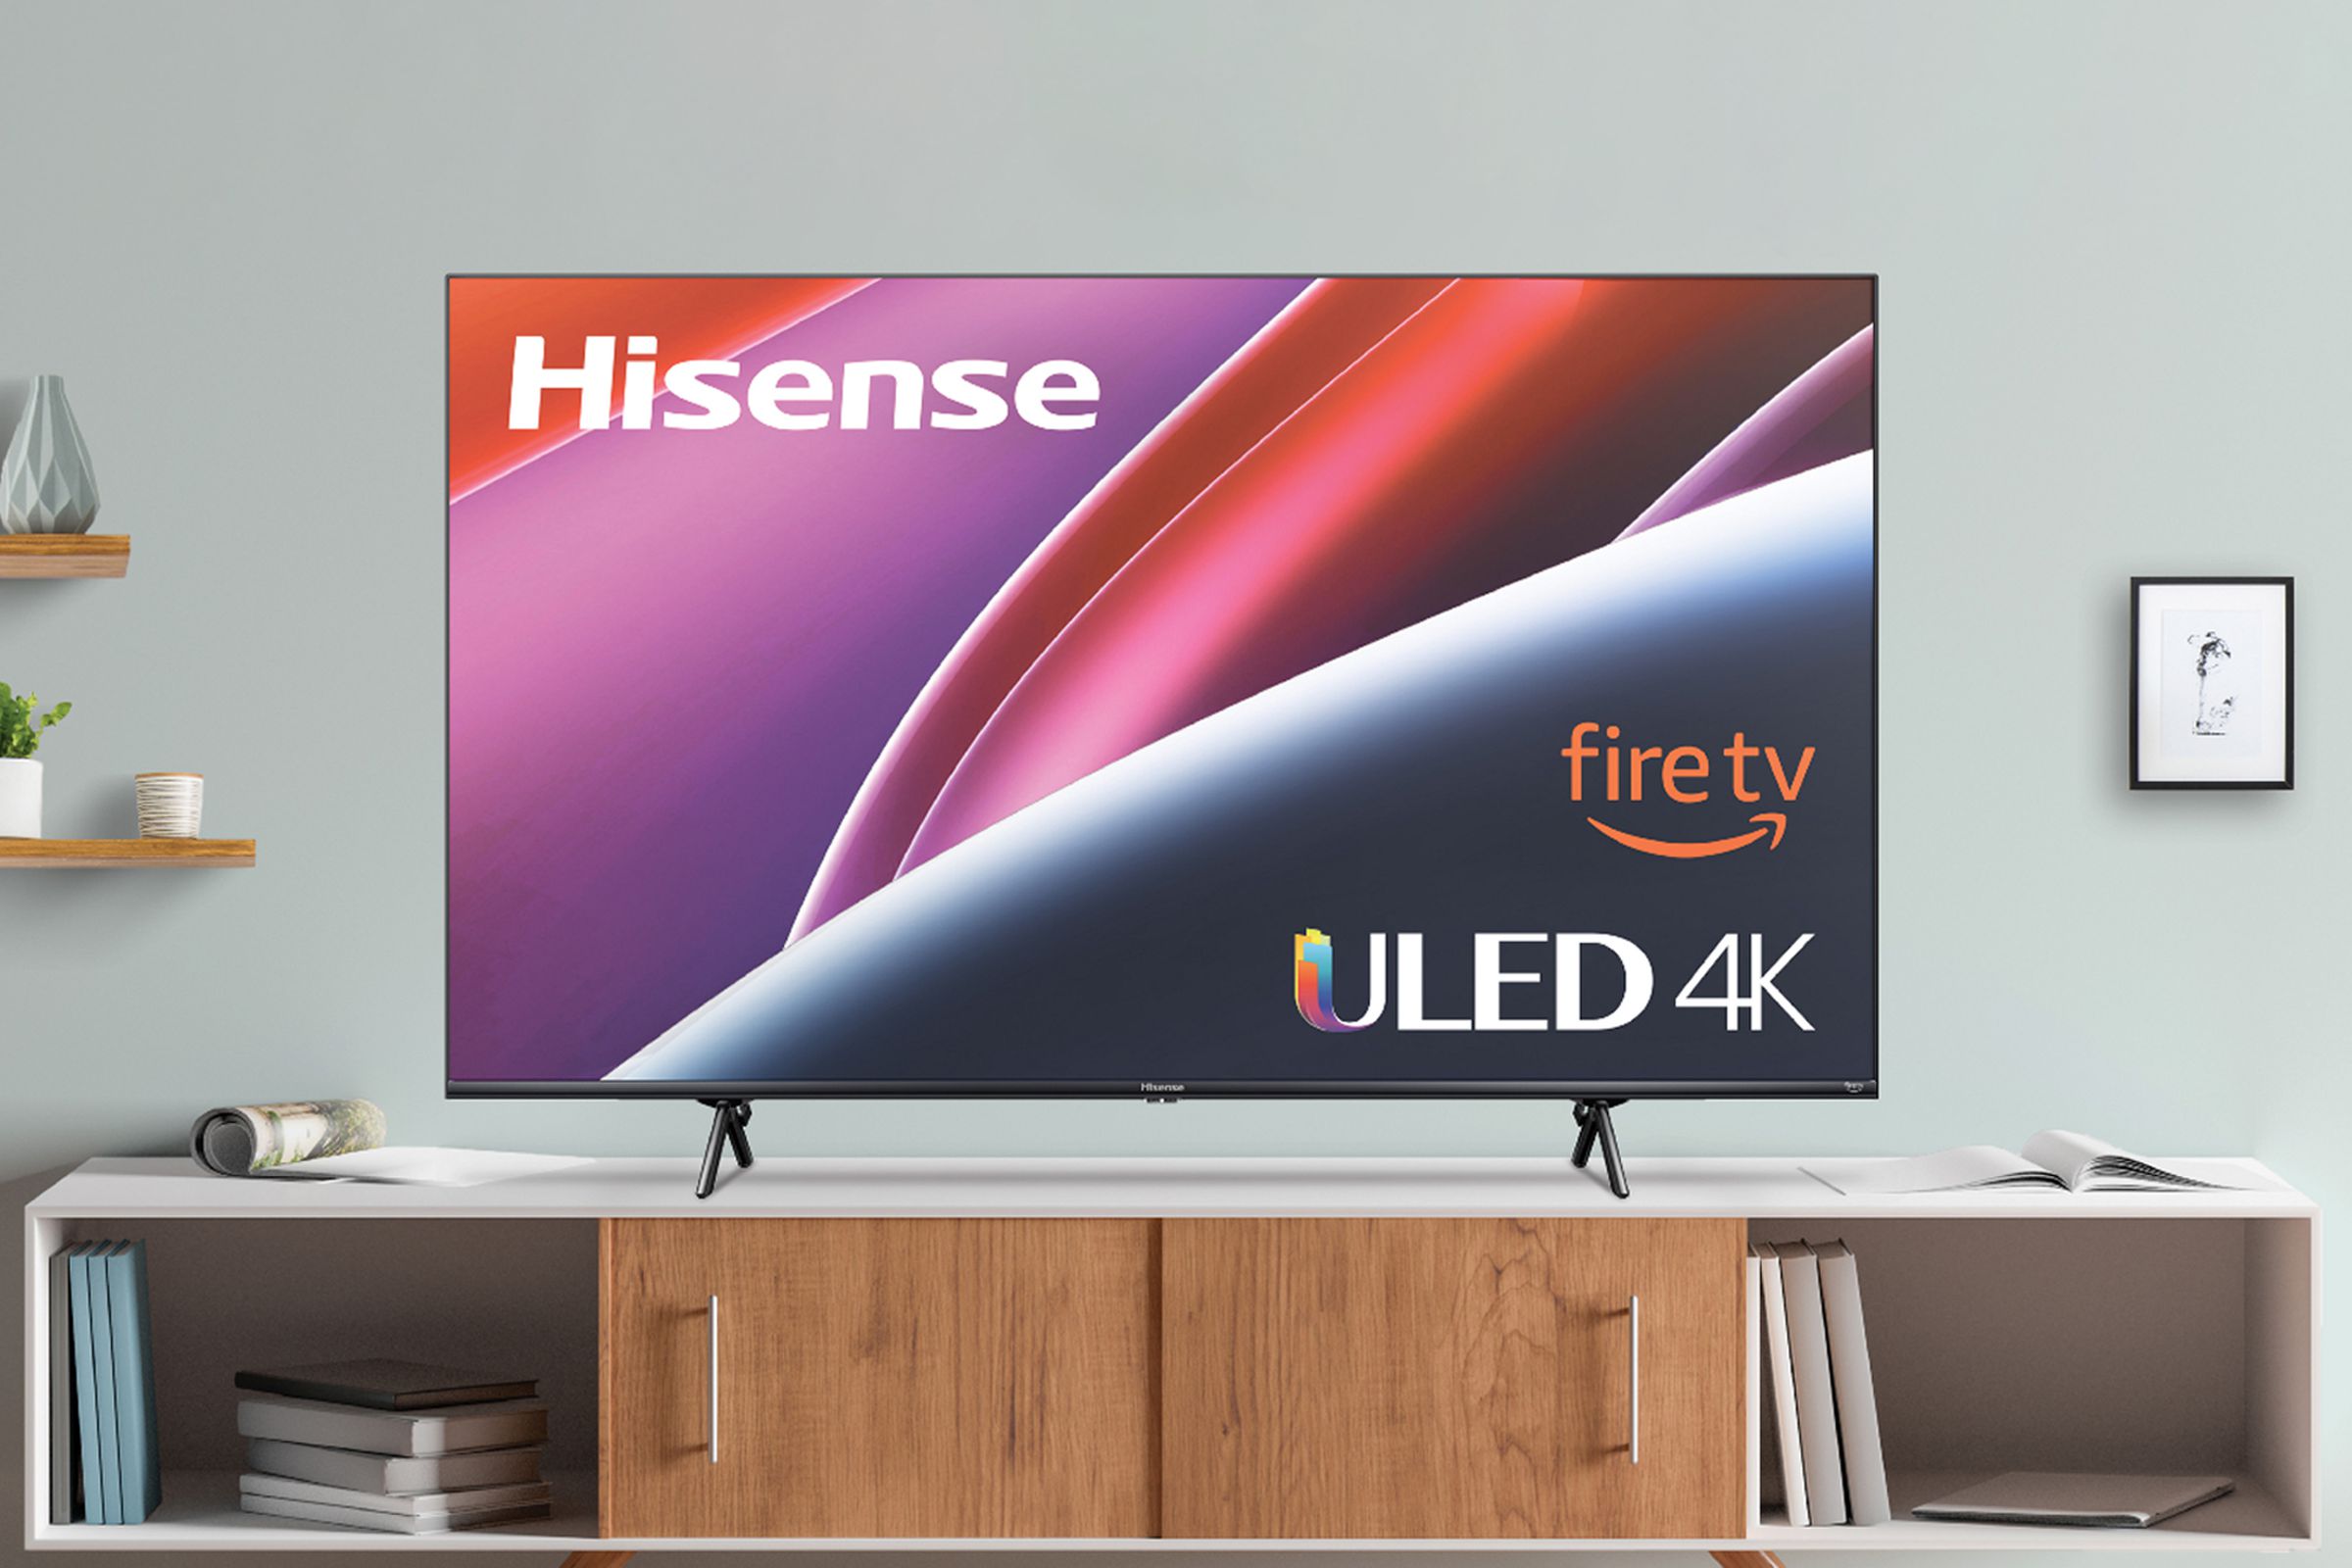 hisense fire tv product card